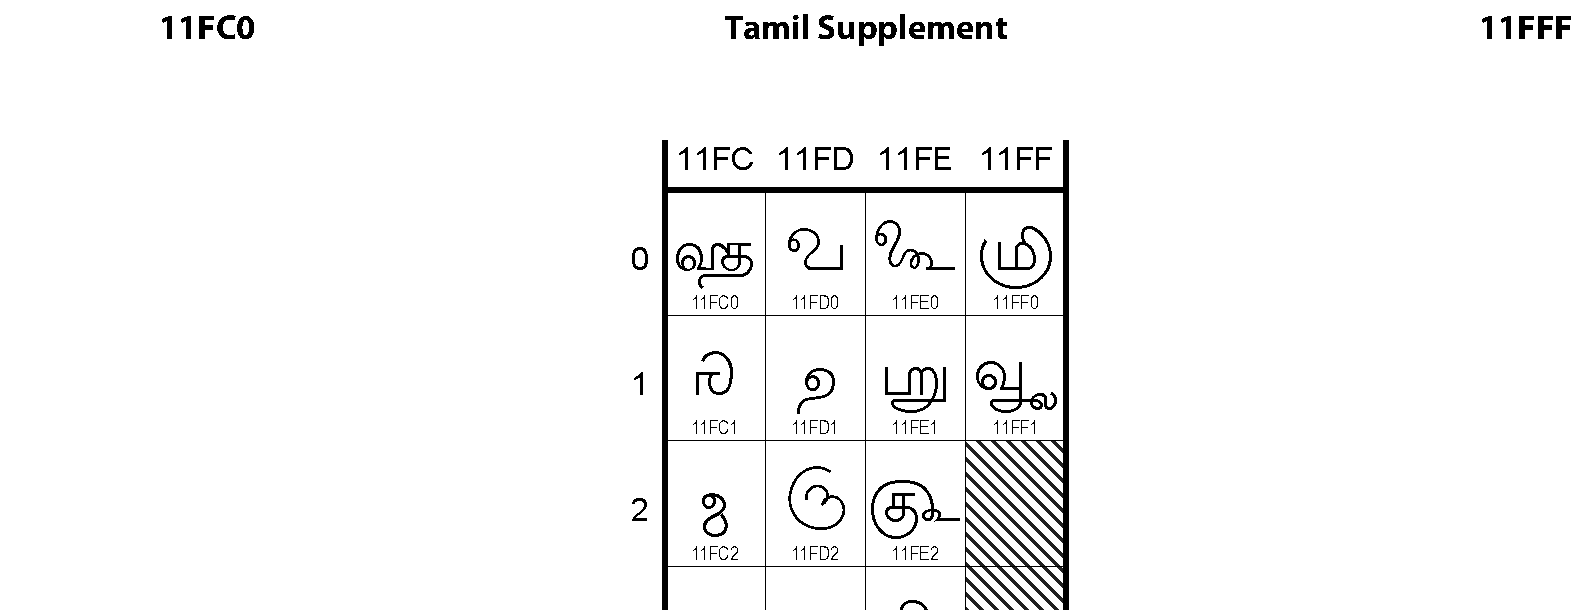 Unicode - Tamil Supplement